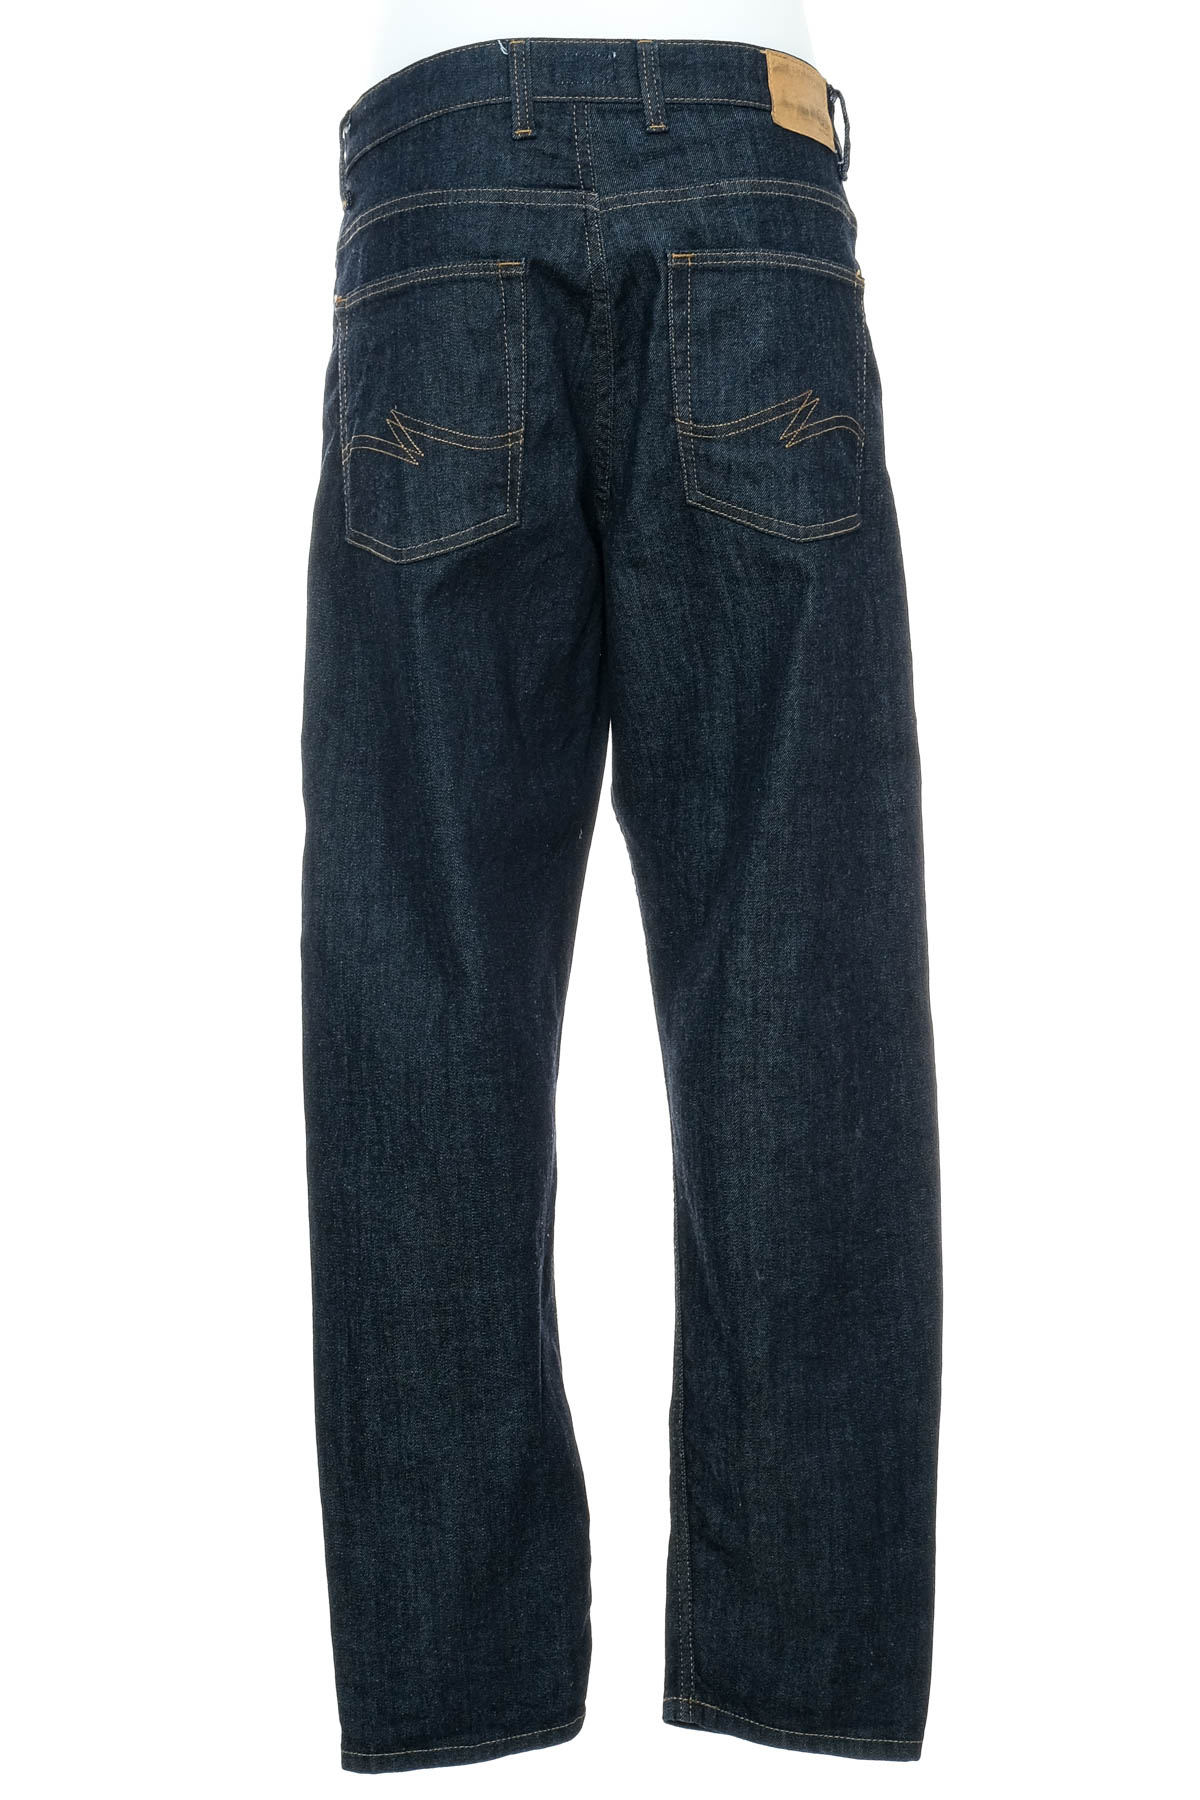 Men's jeans - Q/S - 1